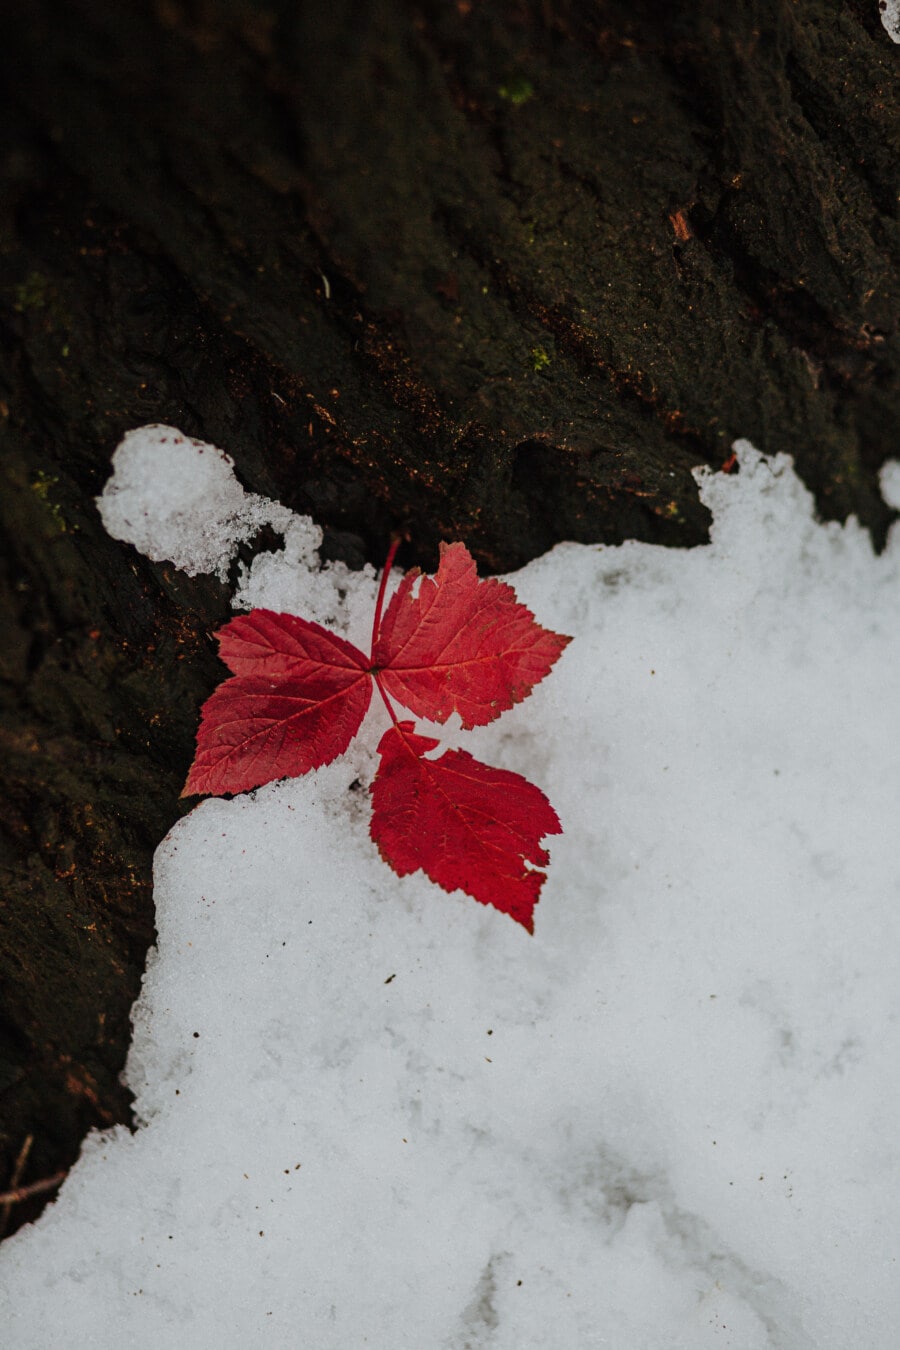 daun, merah tua, bersalju, tekstur, korteks, dingin, embun beku, beku, musim dingin, salju